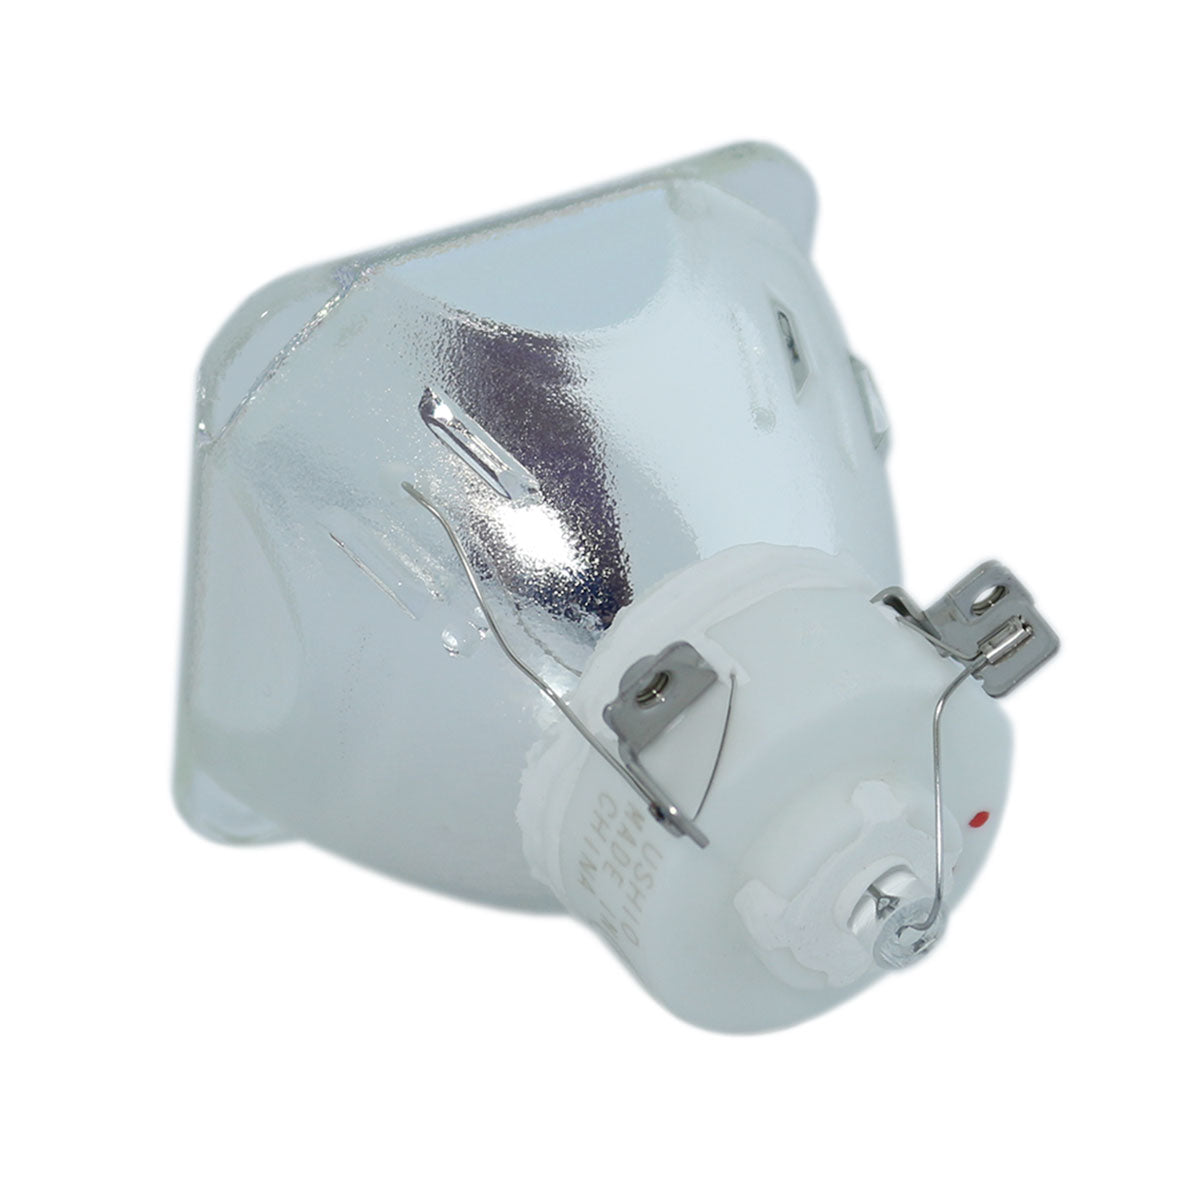 Dukane 456-6136 Ushio Projector Bare Lamp